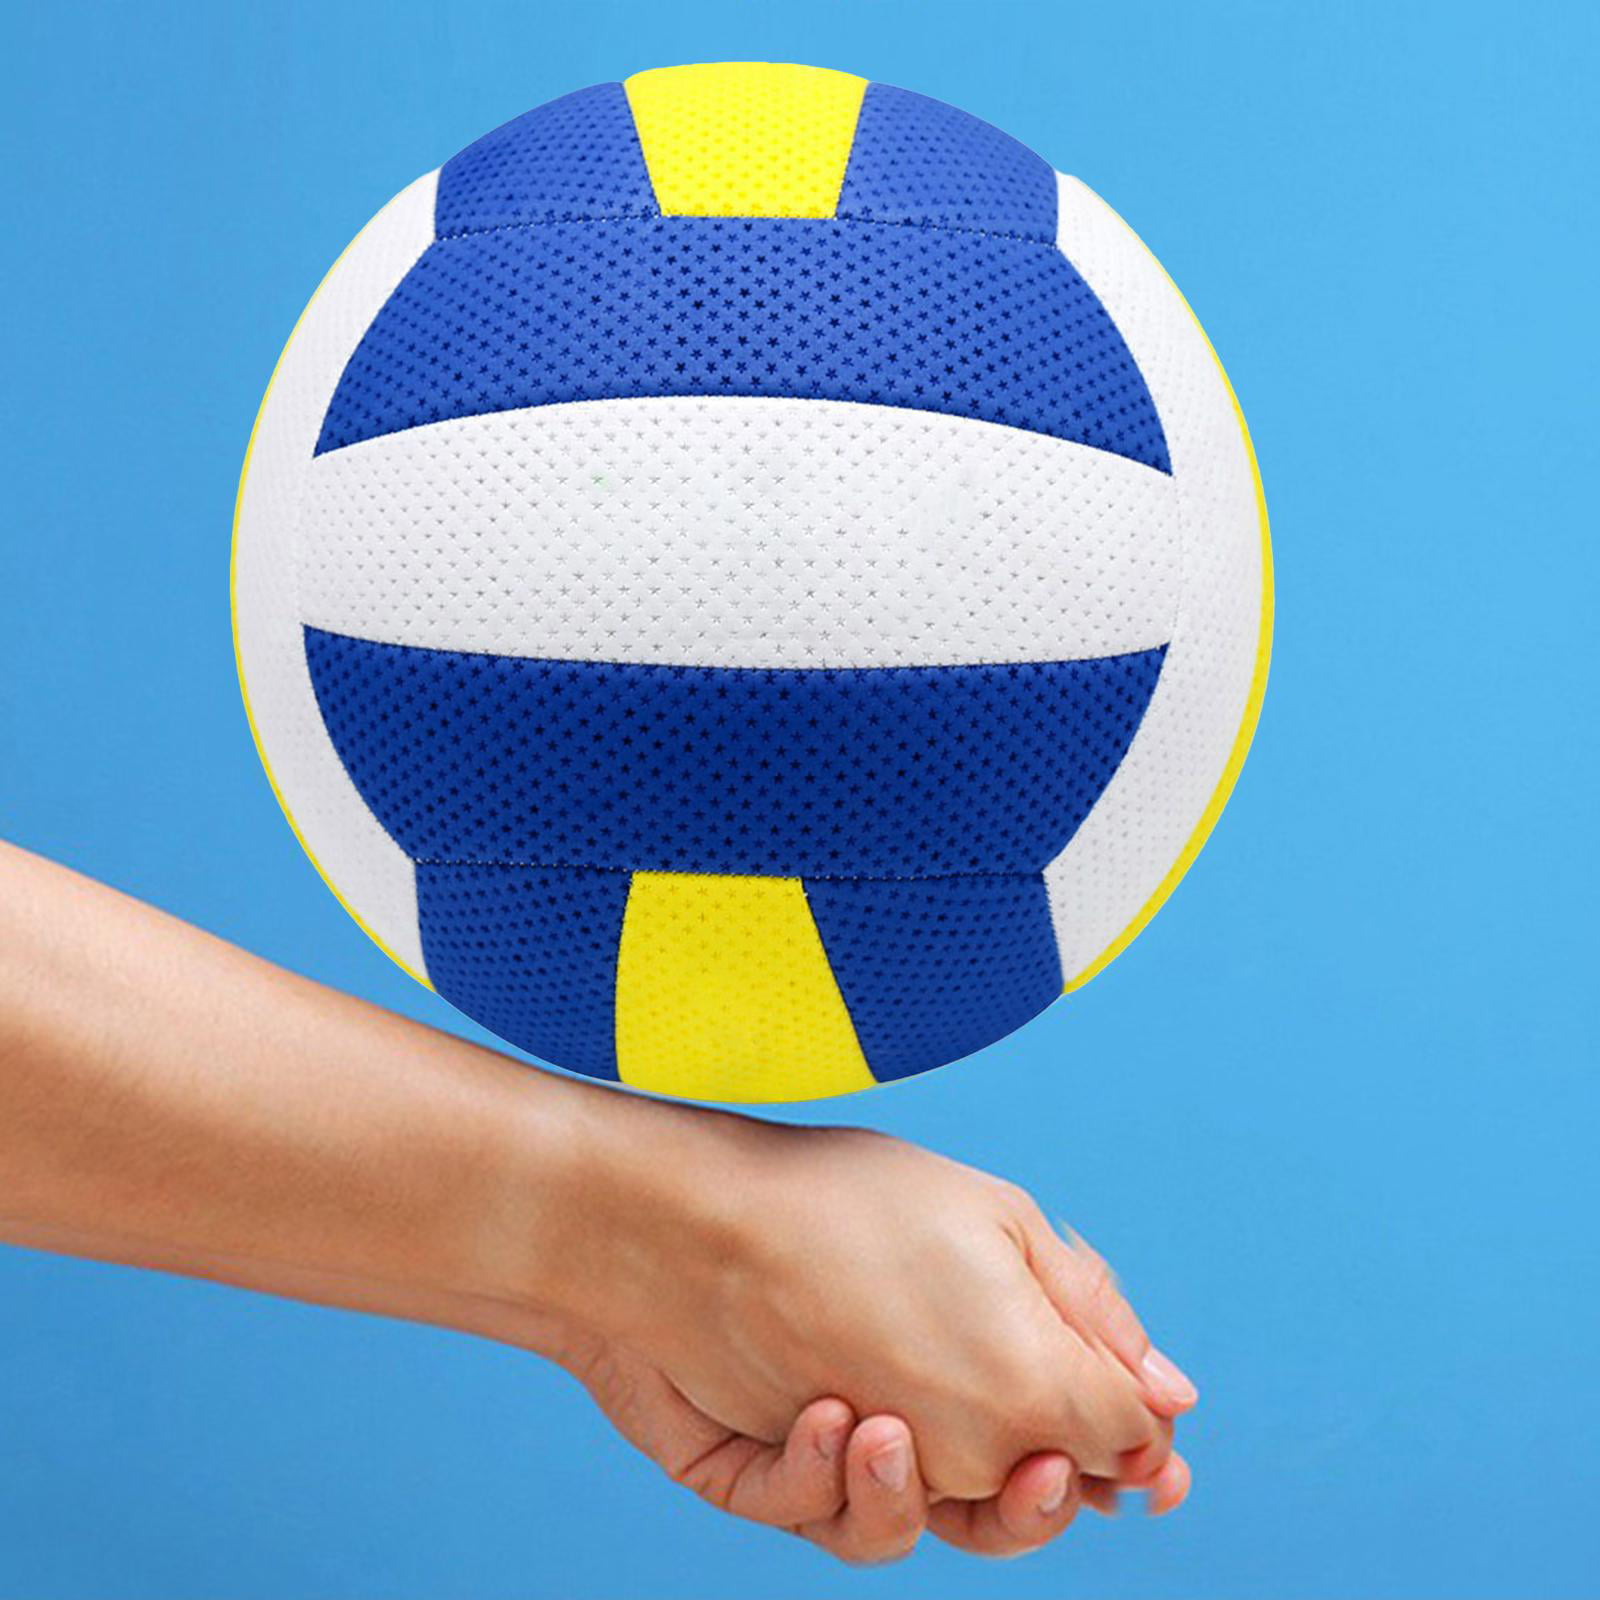 Professional Indoor Volleyball PU Leather Outdoor Ball w/ Ball Pump Beach  Gym Training play children Beginner Teenager Blue Yellow